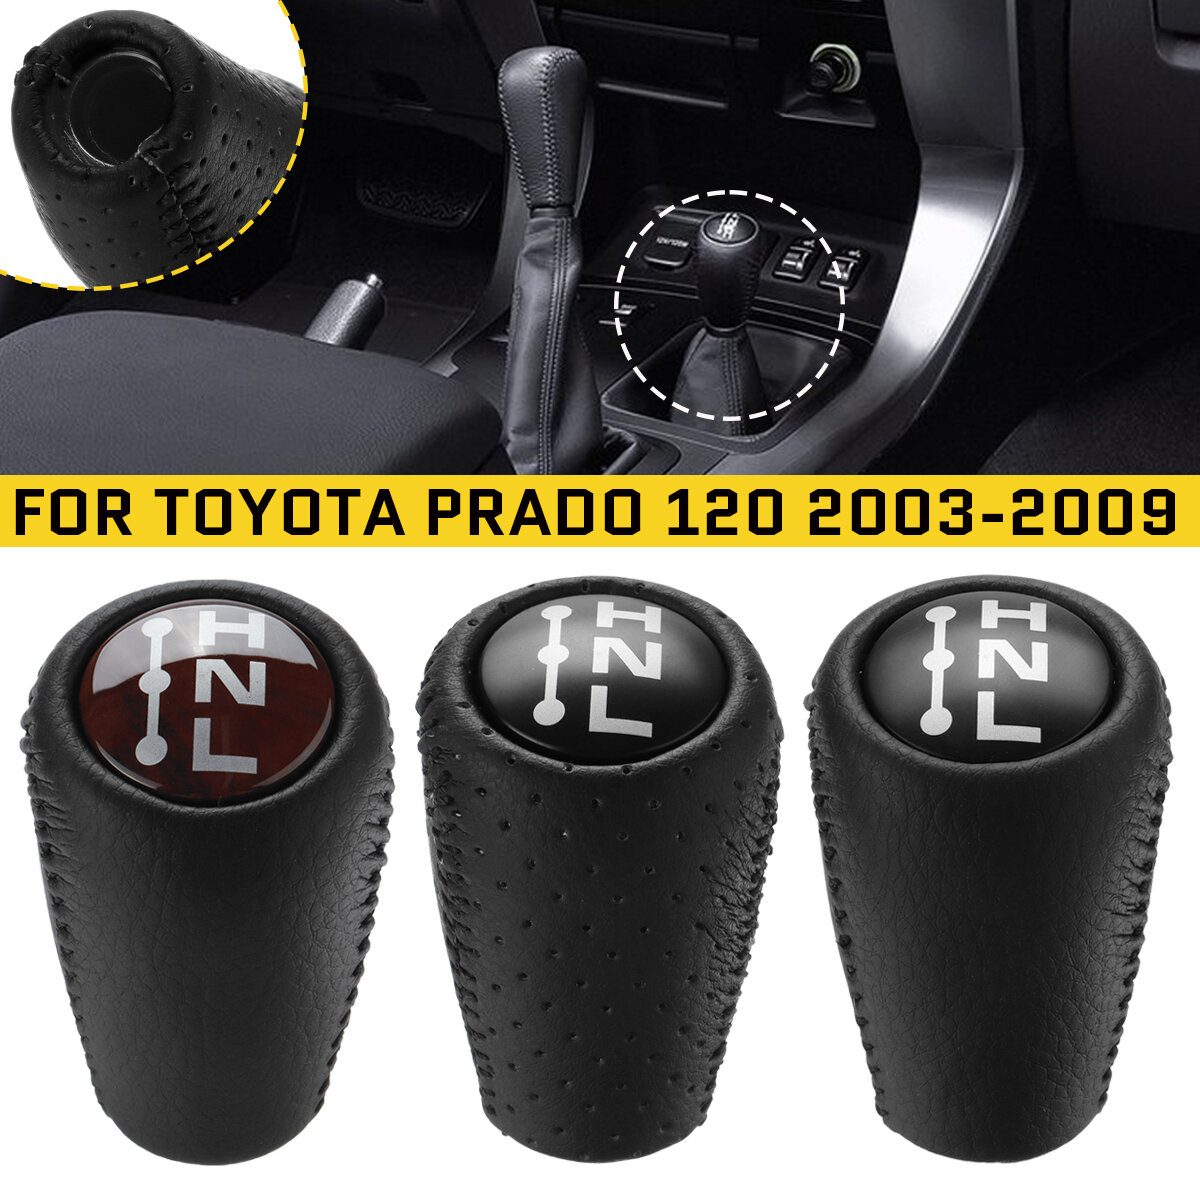 Auto Car AT Gear Lever Head Shift Knob Fits For Toyota Prado 120 2003-2009 mhestore2009